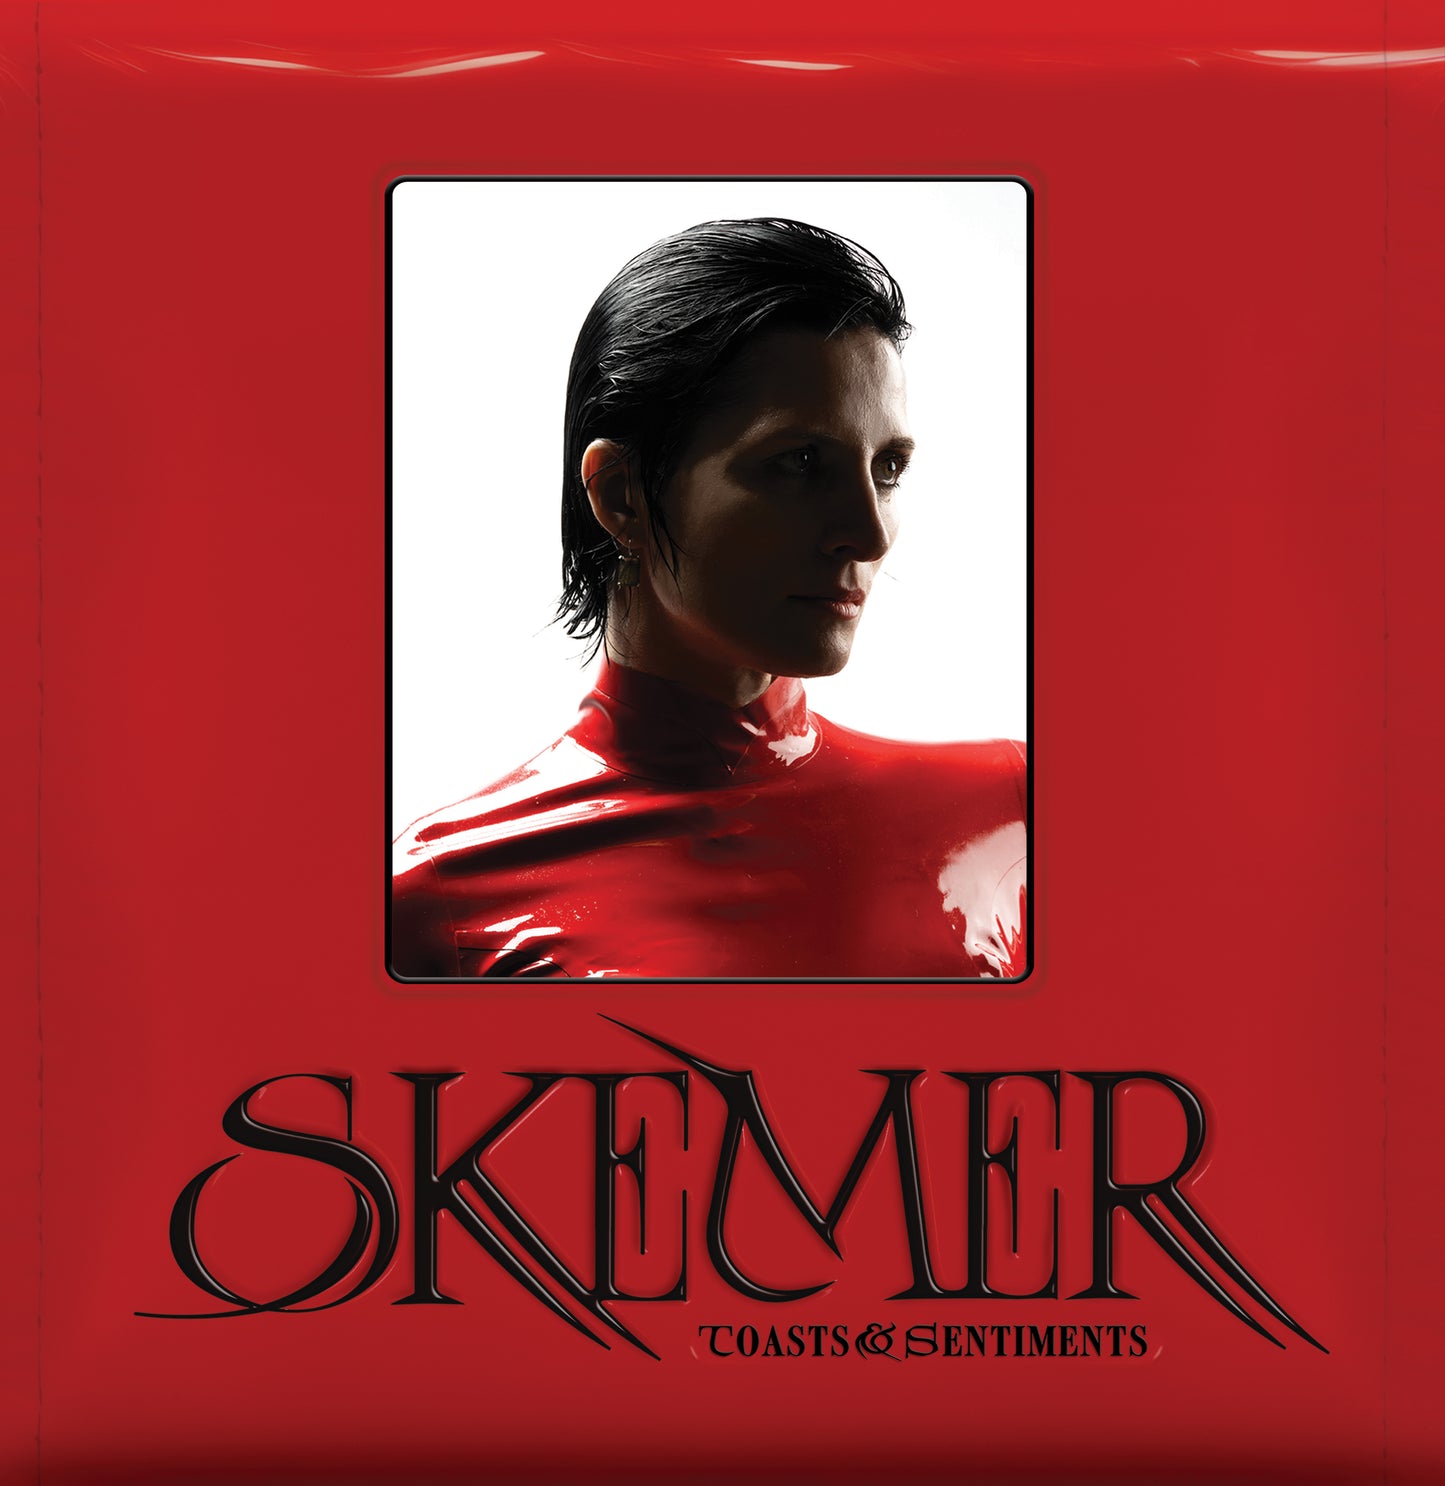 Skemer - Toasts & Sentiments CD (Pre-Order)